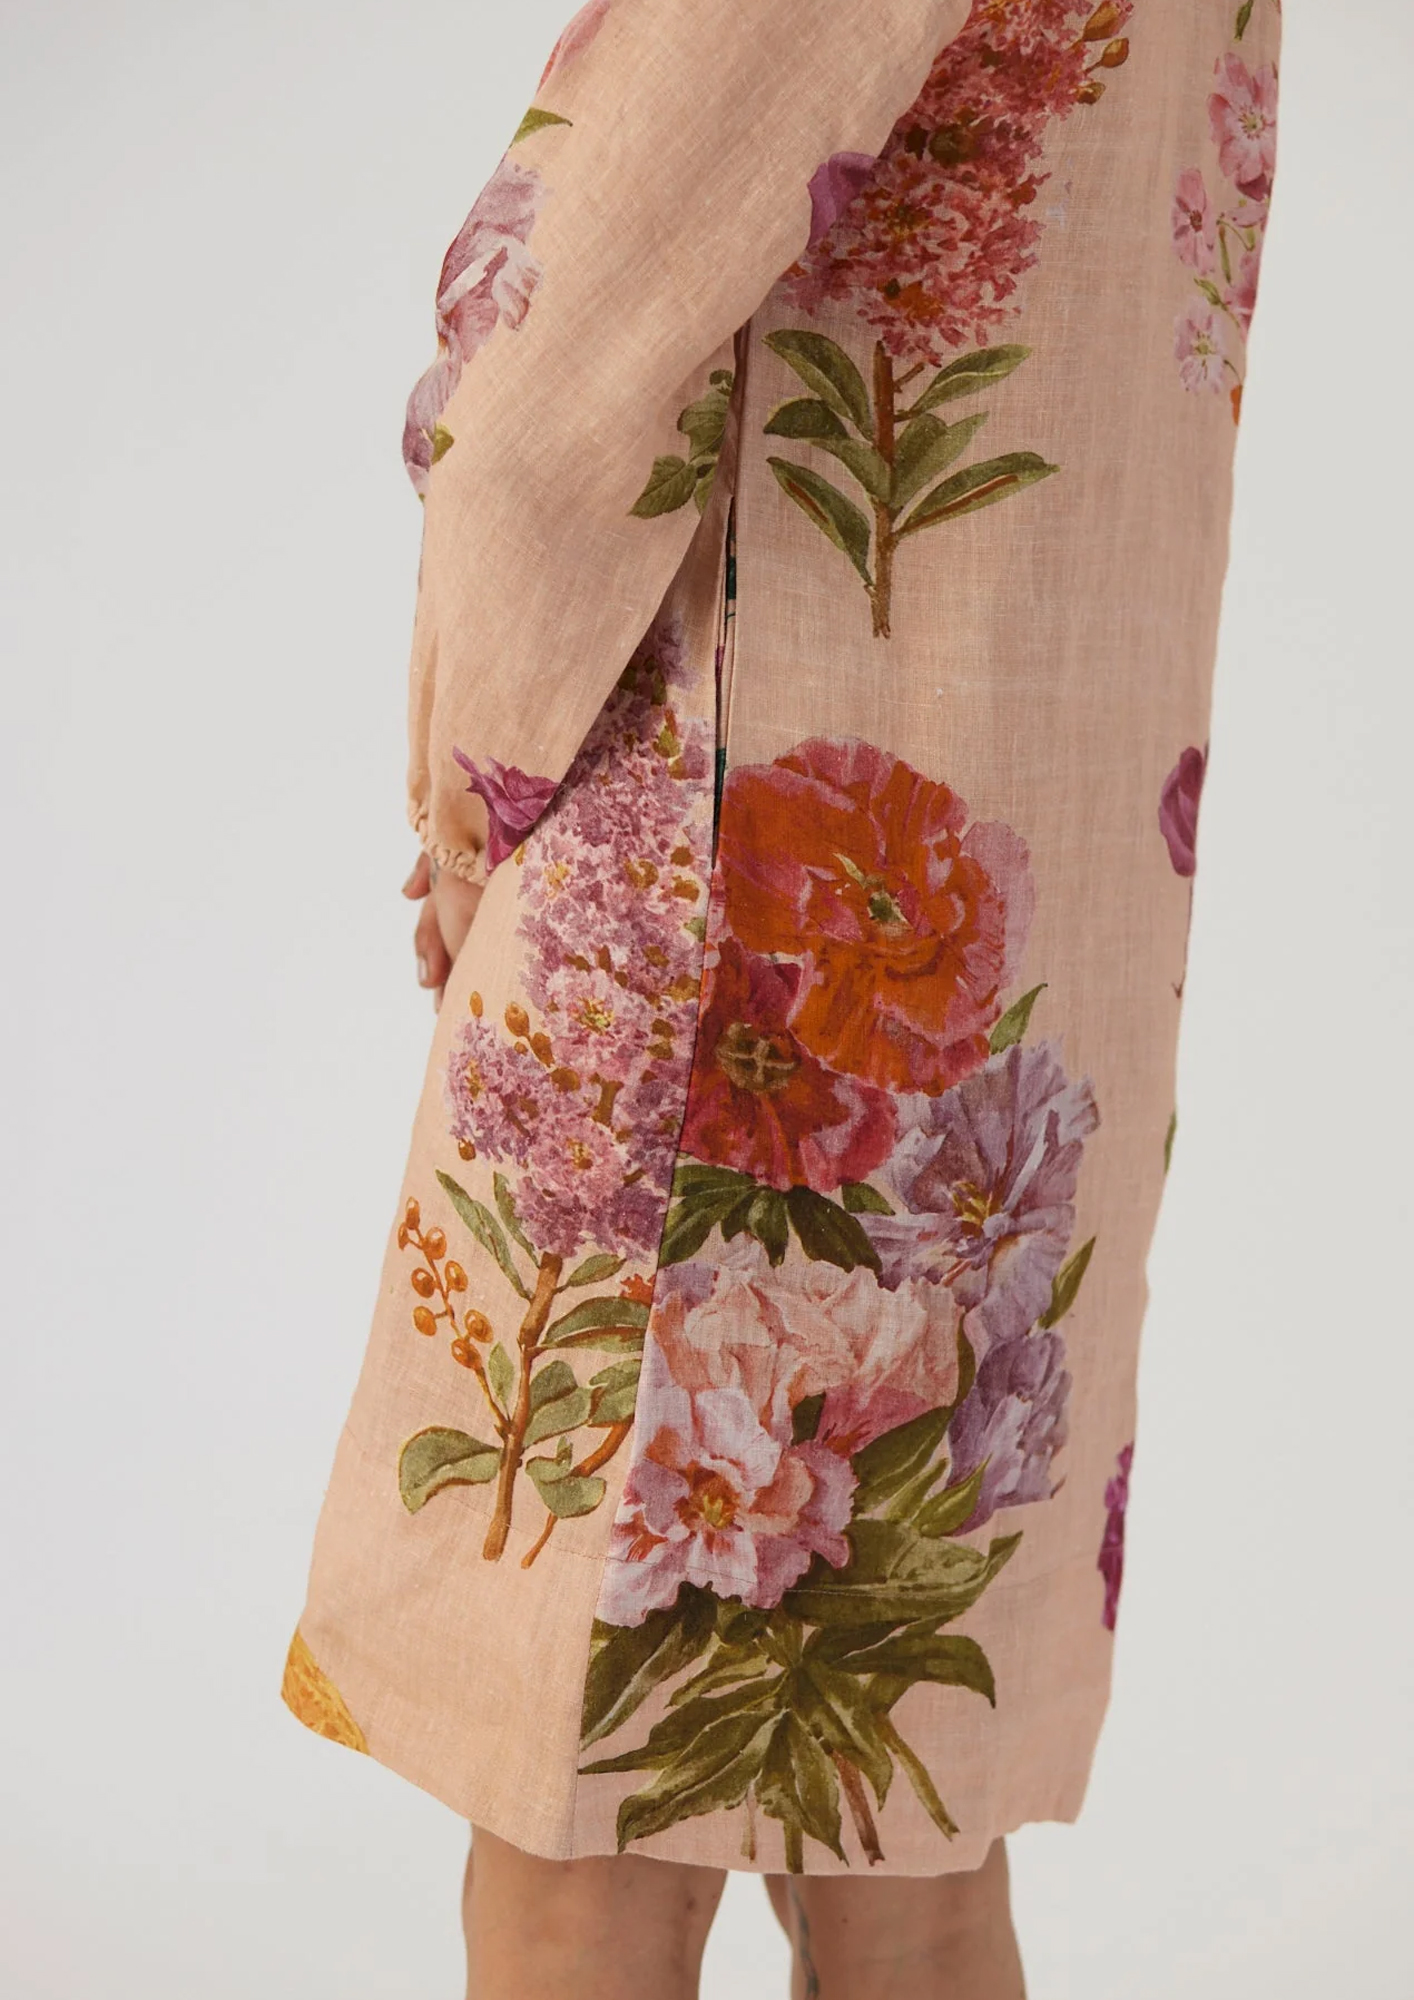 Detailed botanical print on the Vintage Garden Dress.